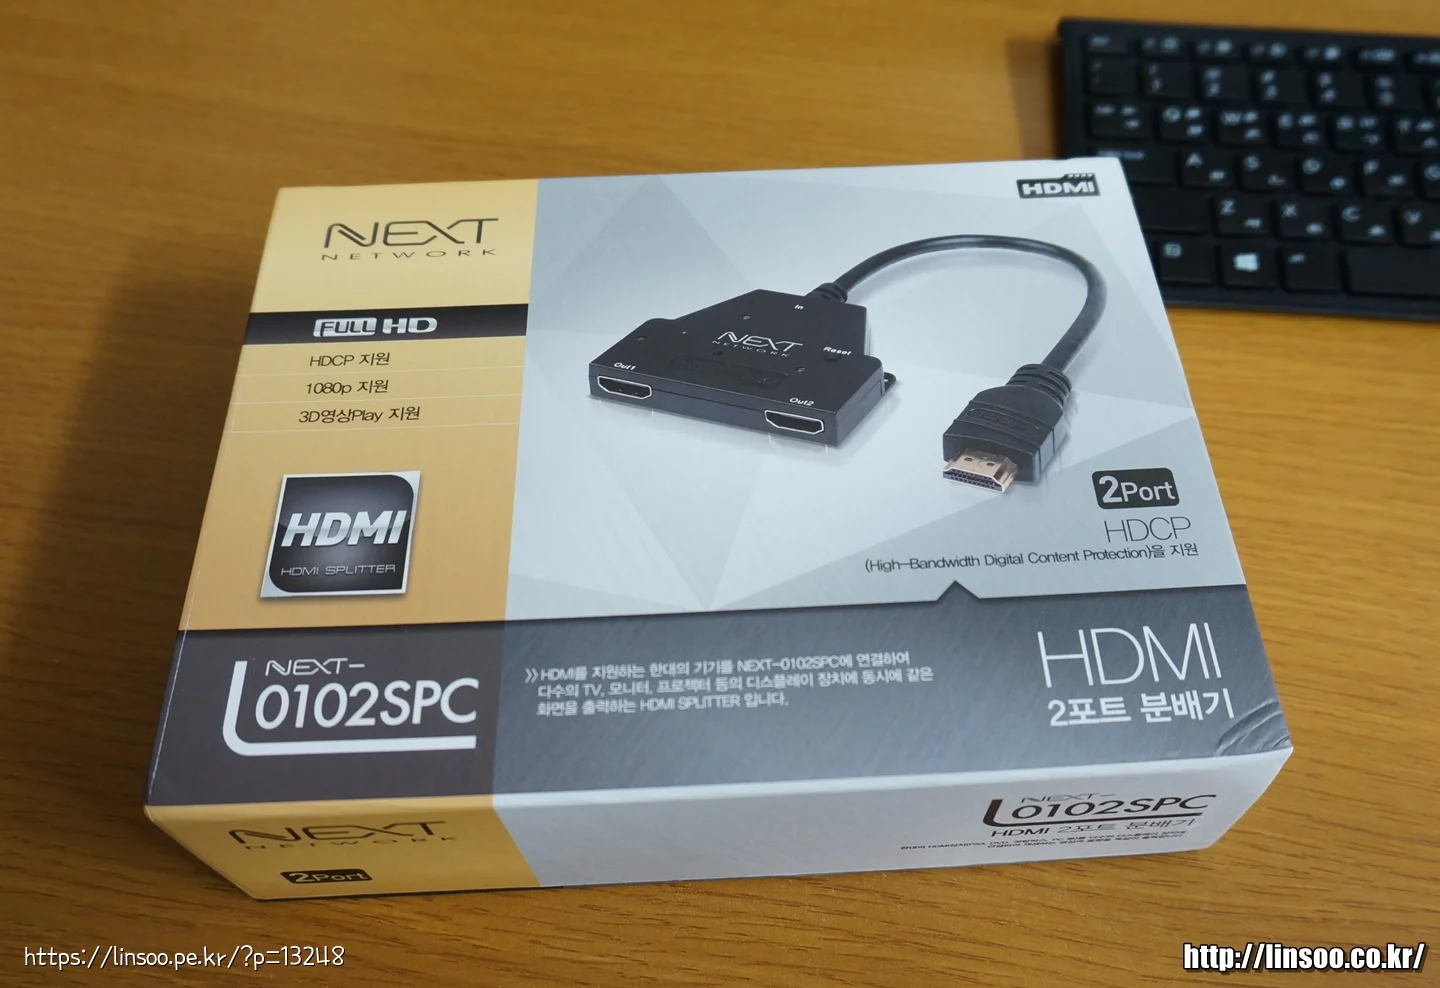 next-0102spc HDMI 스플리터 박스사진